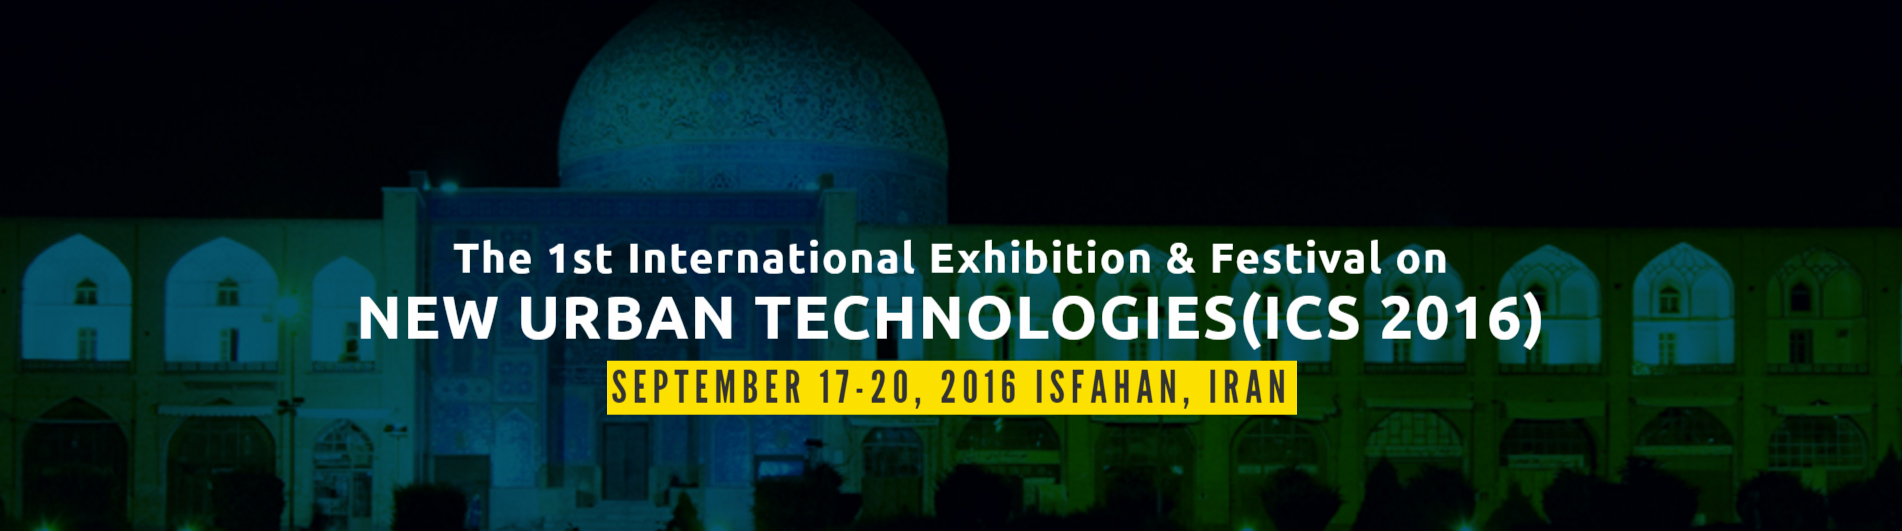 1st_international_exhibition_new_urban_technologies